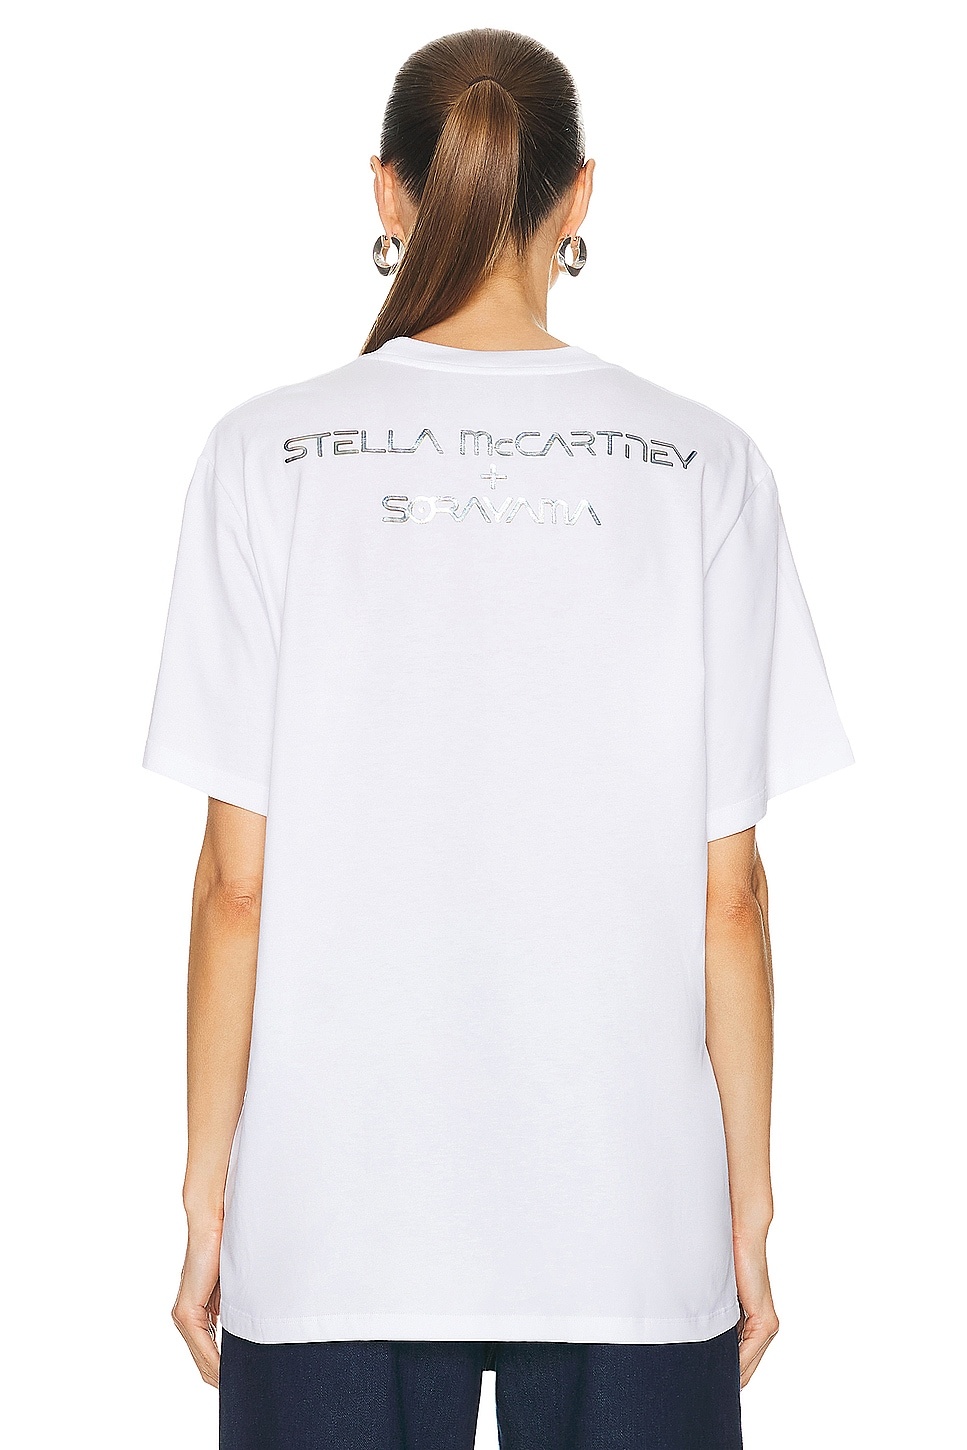 X Sorayama White T-shirt - 3